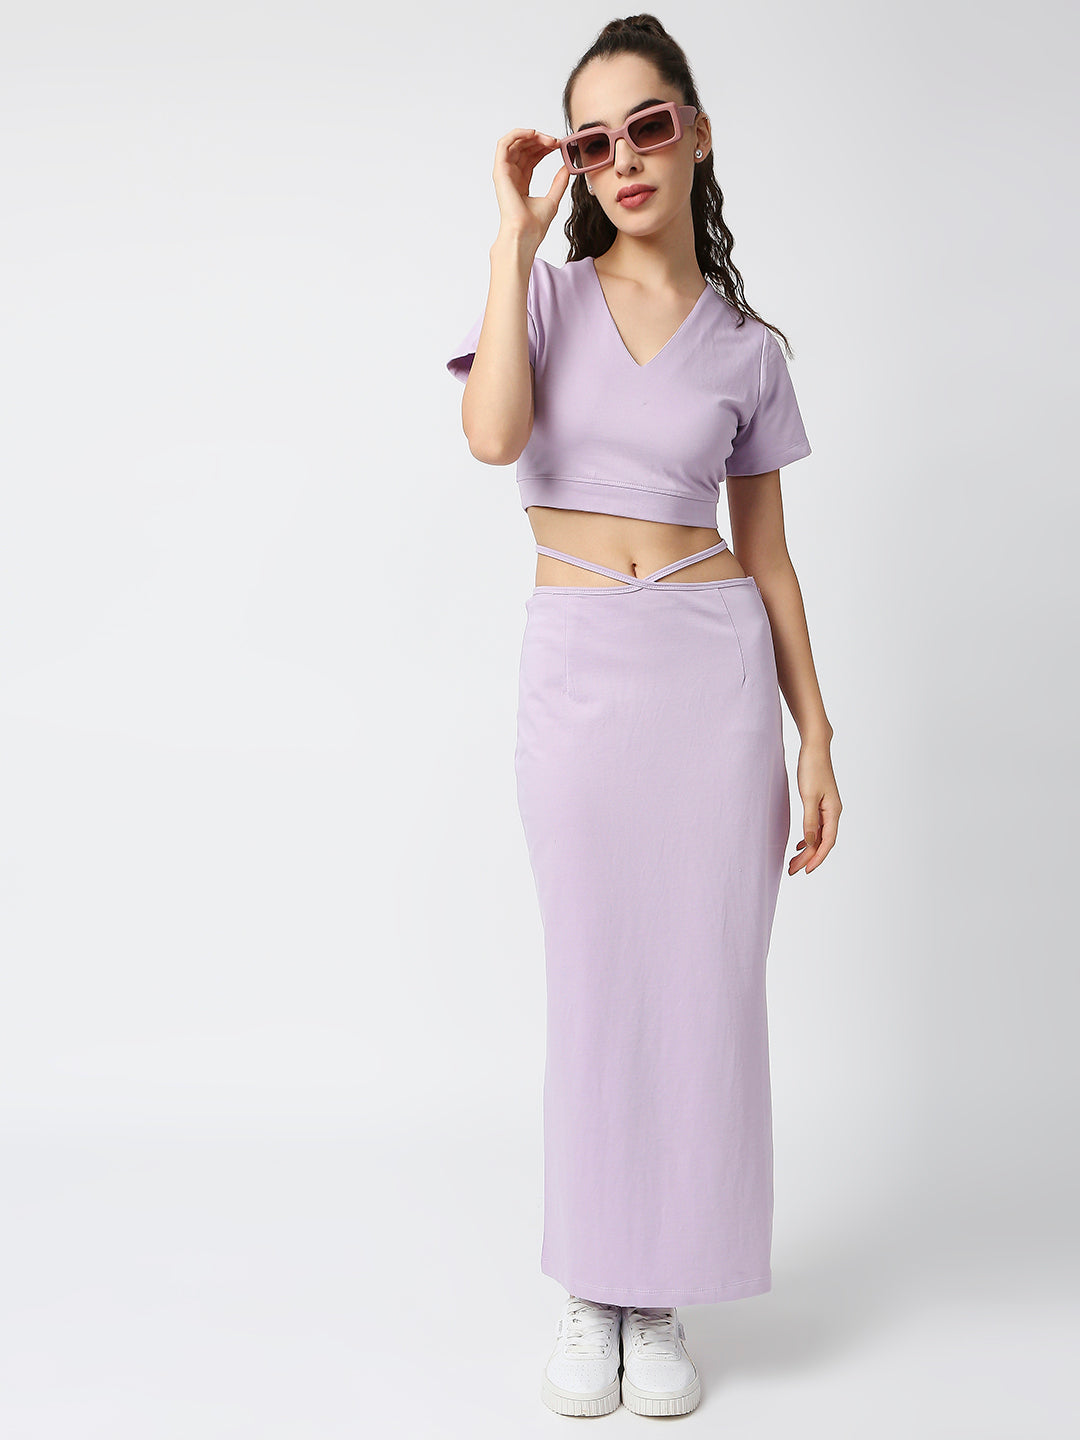 Buy Blamblack Women's Lavender Color Co-ordinates Set